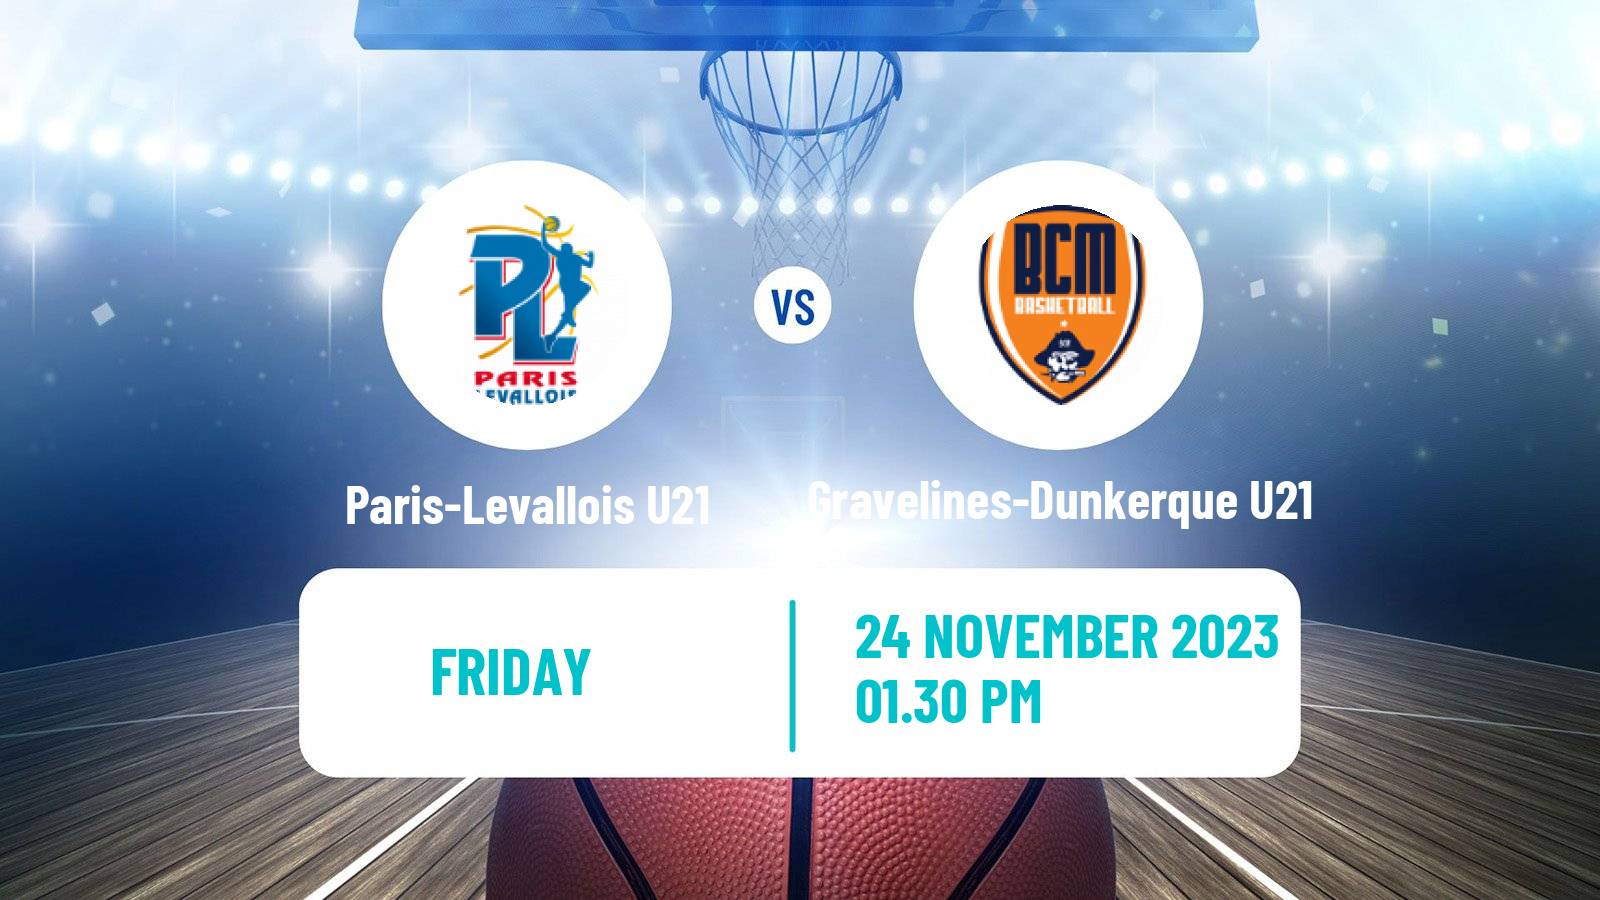 Basketball French Espoirs U21 Basketball Paris-Levallois U21 - Gravelines-Dunkerque U21